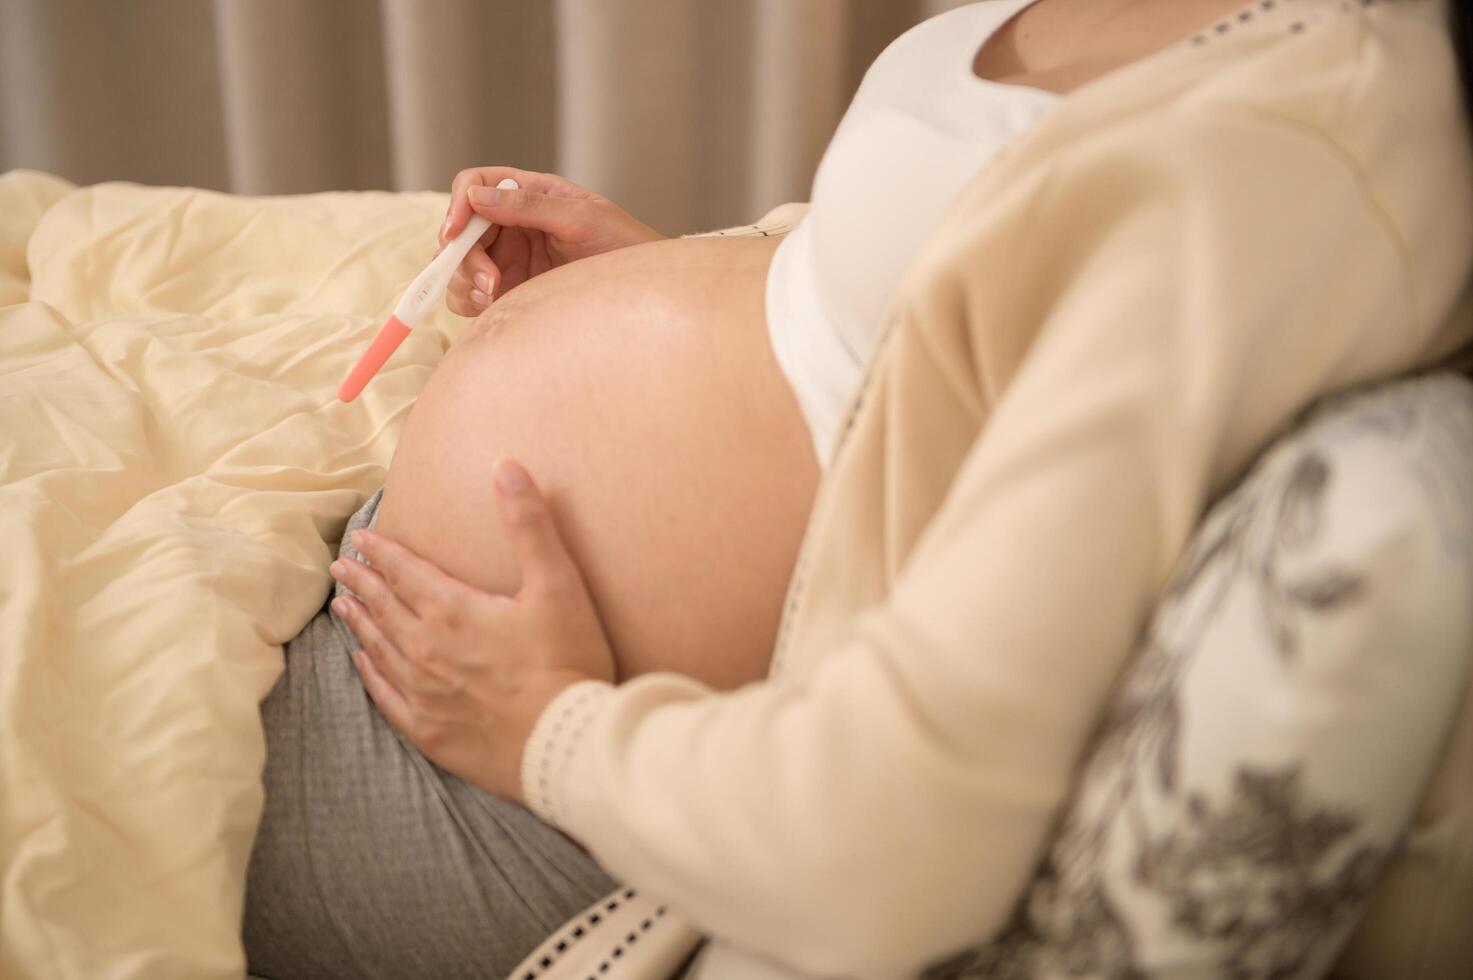 Beautiful pregnant woman holding positive pregnancy test, fertility infertility treatment, IVF, future maternity concept photo